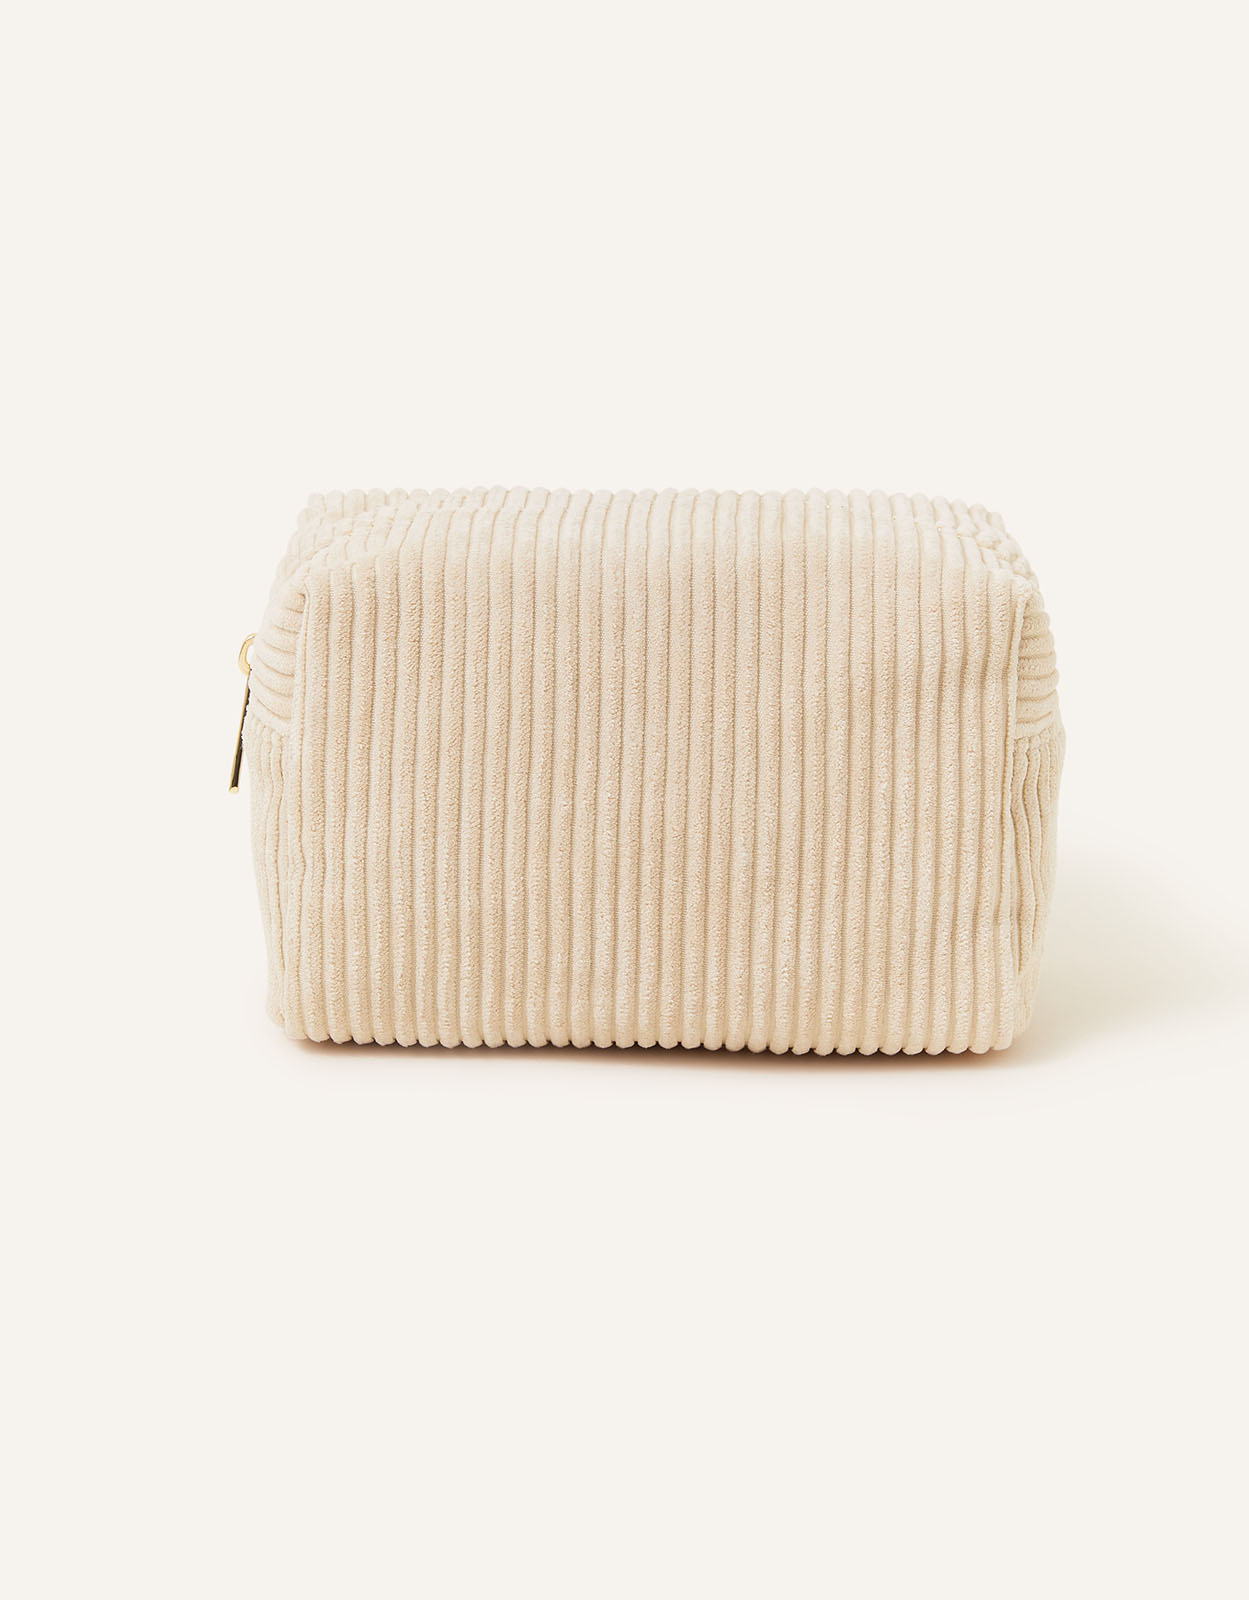 Accessorize Women's Cord Make Up Bag, Size: L 18 cm x W 11 cm